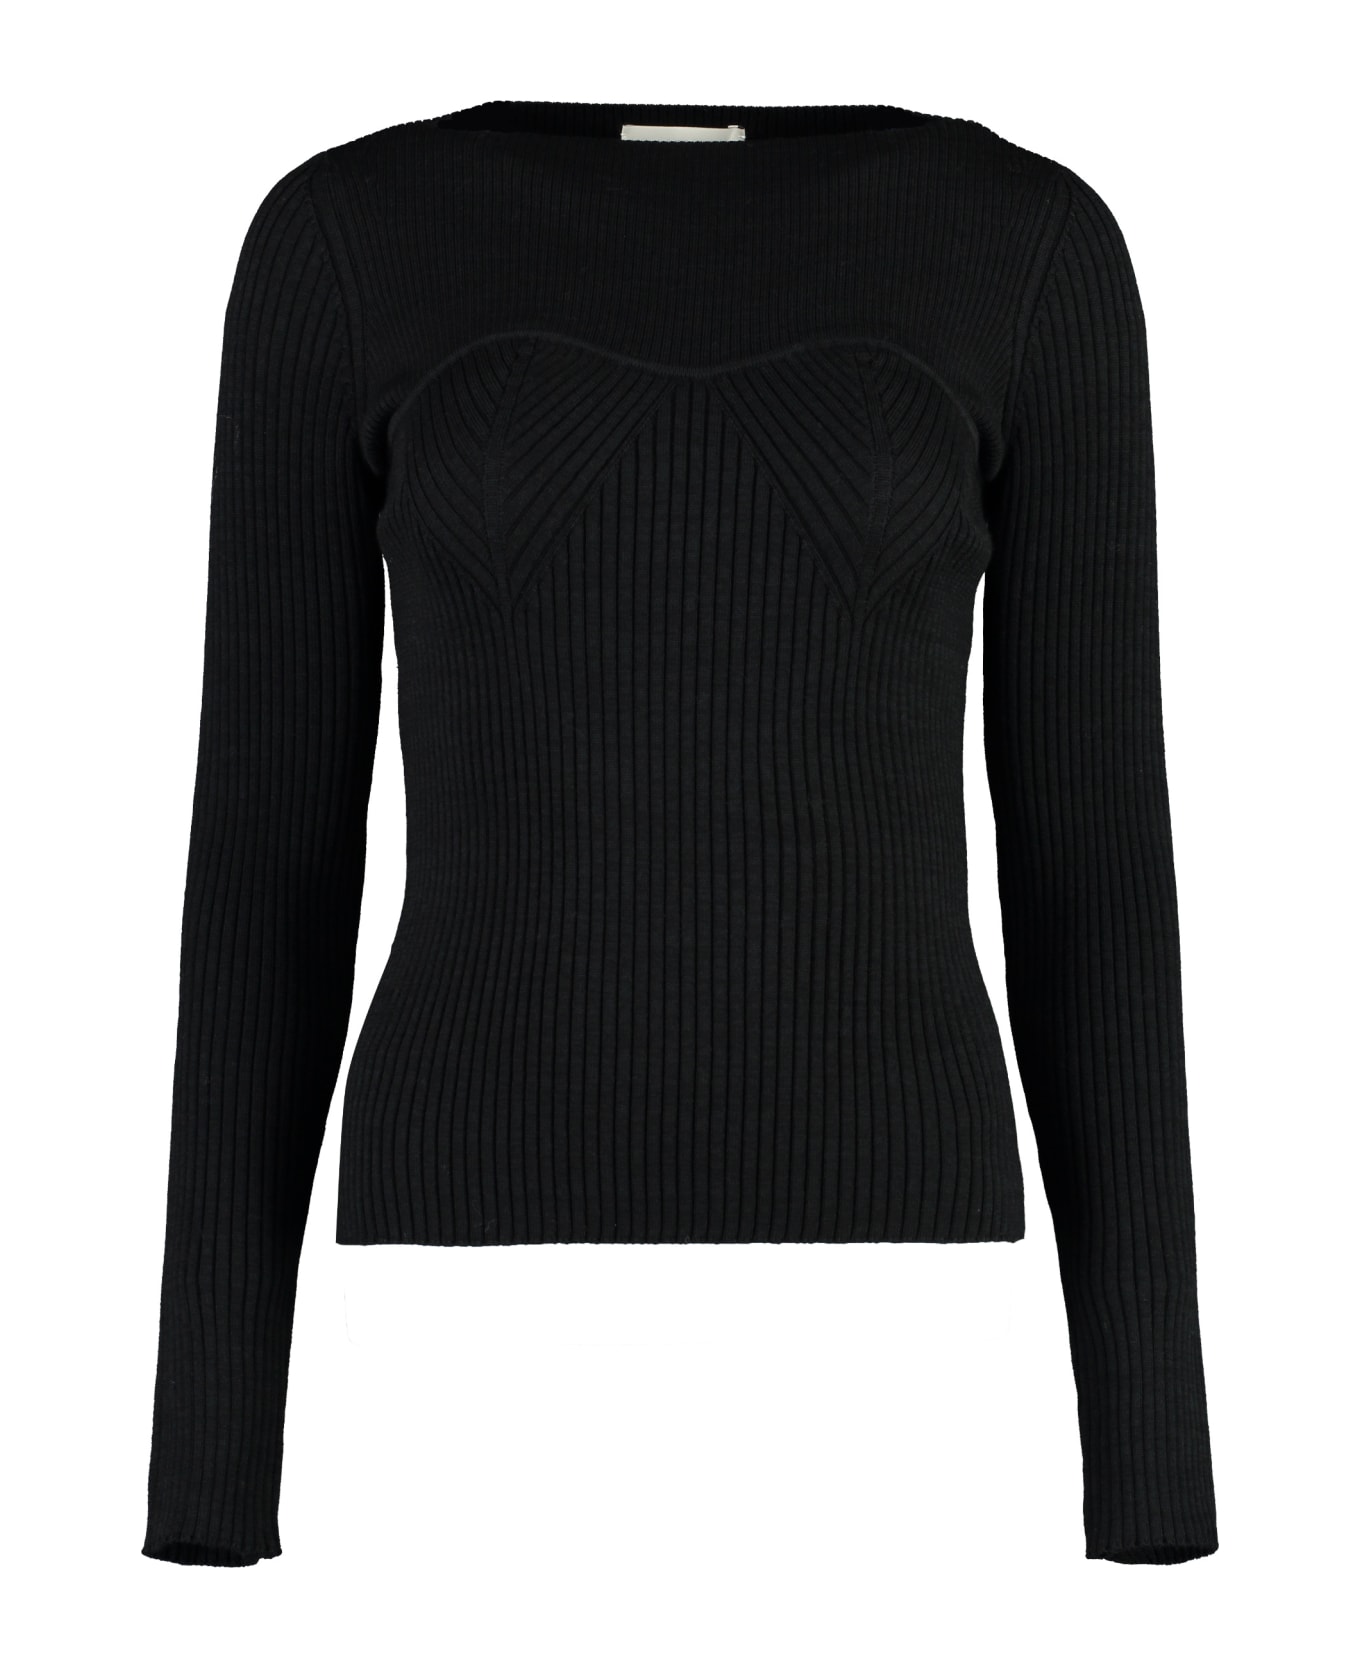 Isabel Marant Zilyae Merino Wool Sweater - black ニットウェア